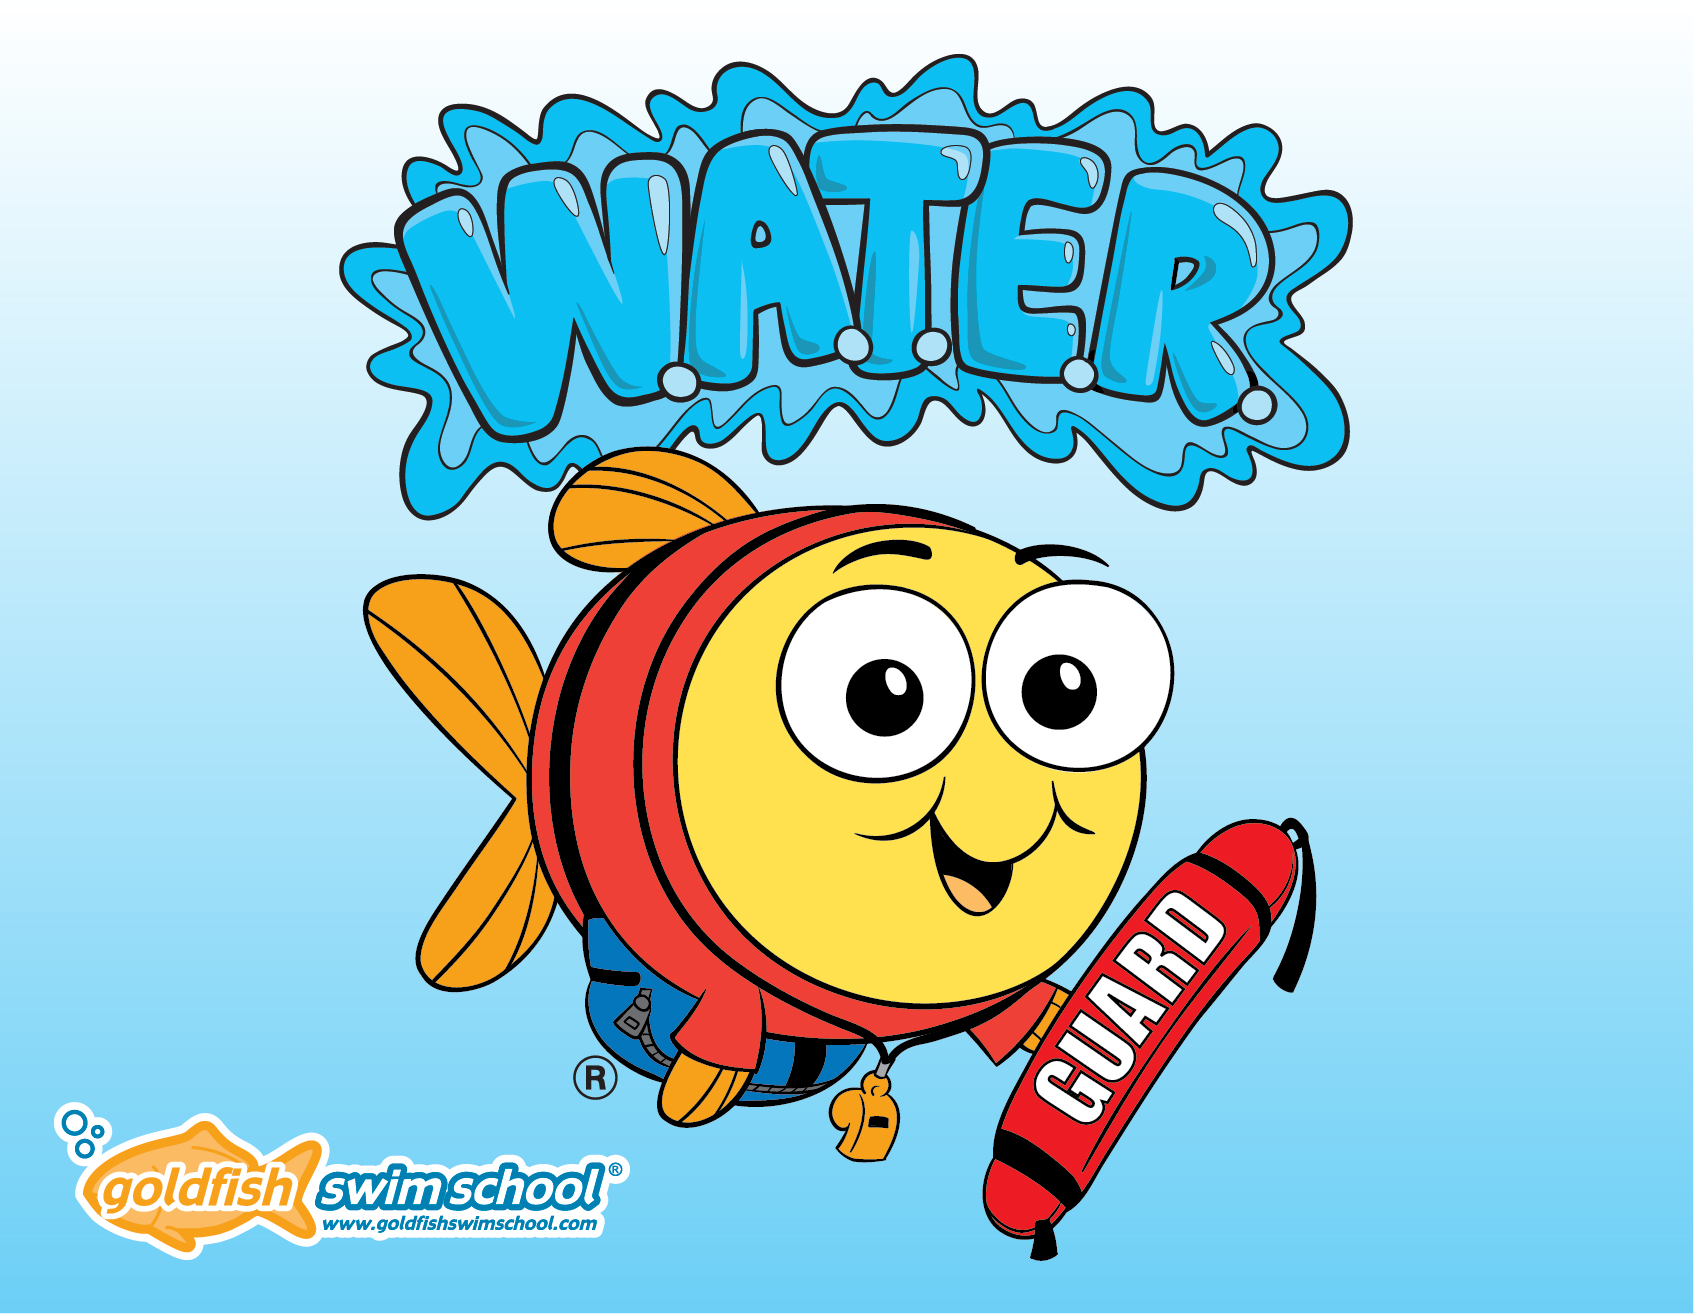 Learn Children's Water Safety with Goldfish Swim School!